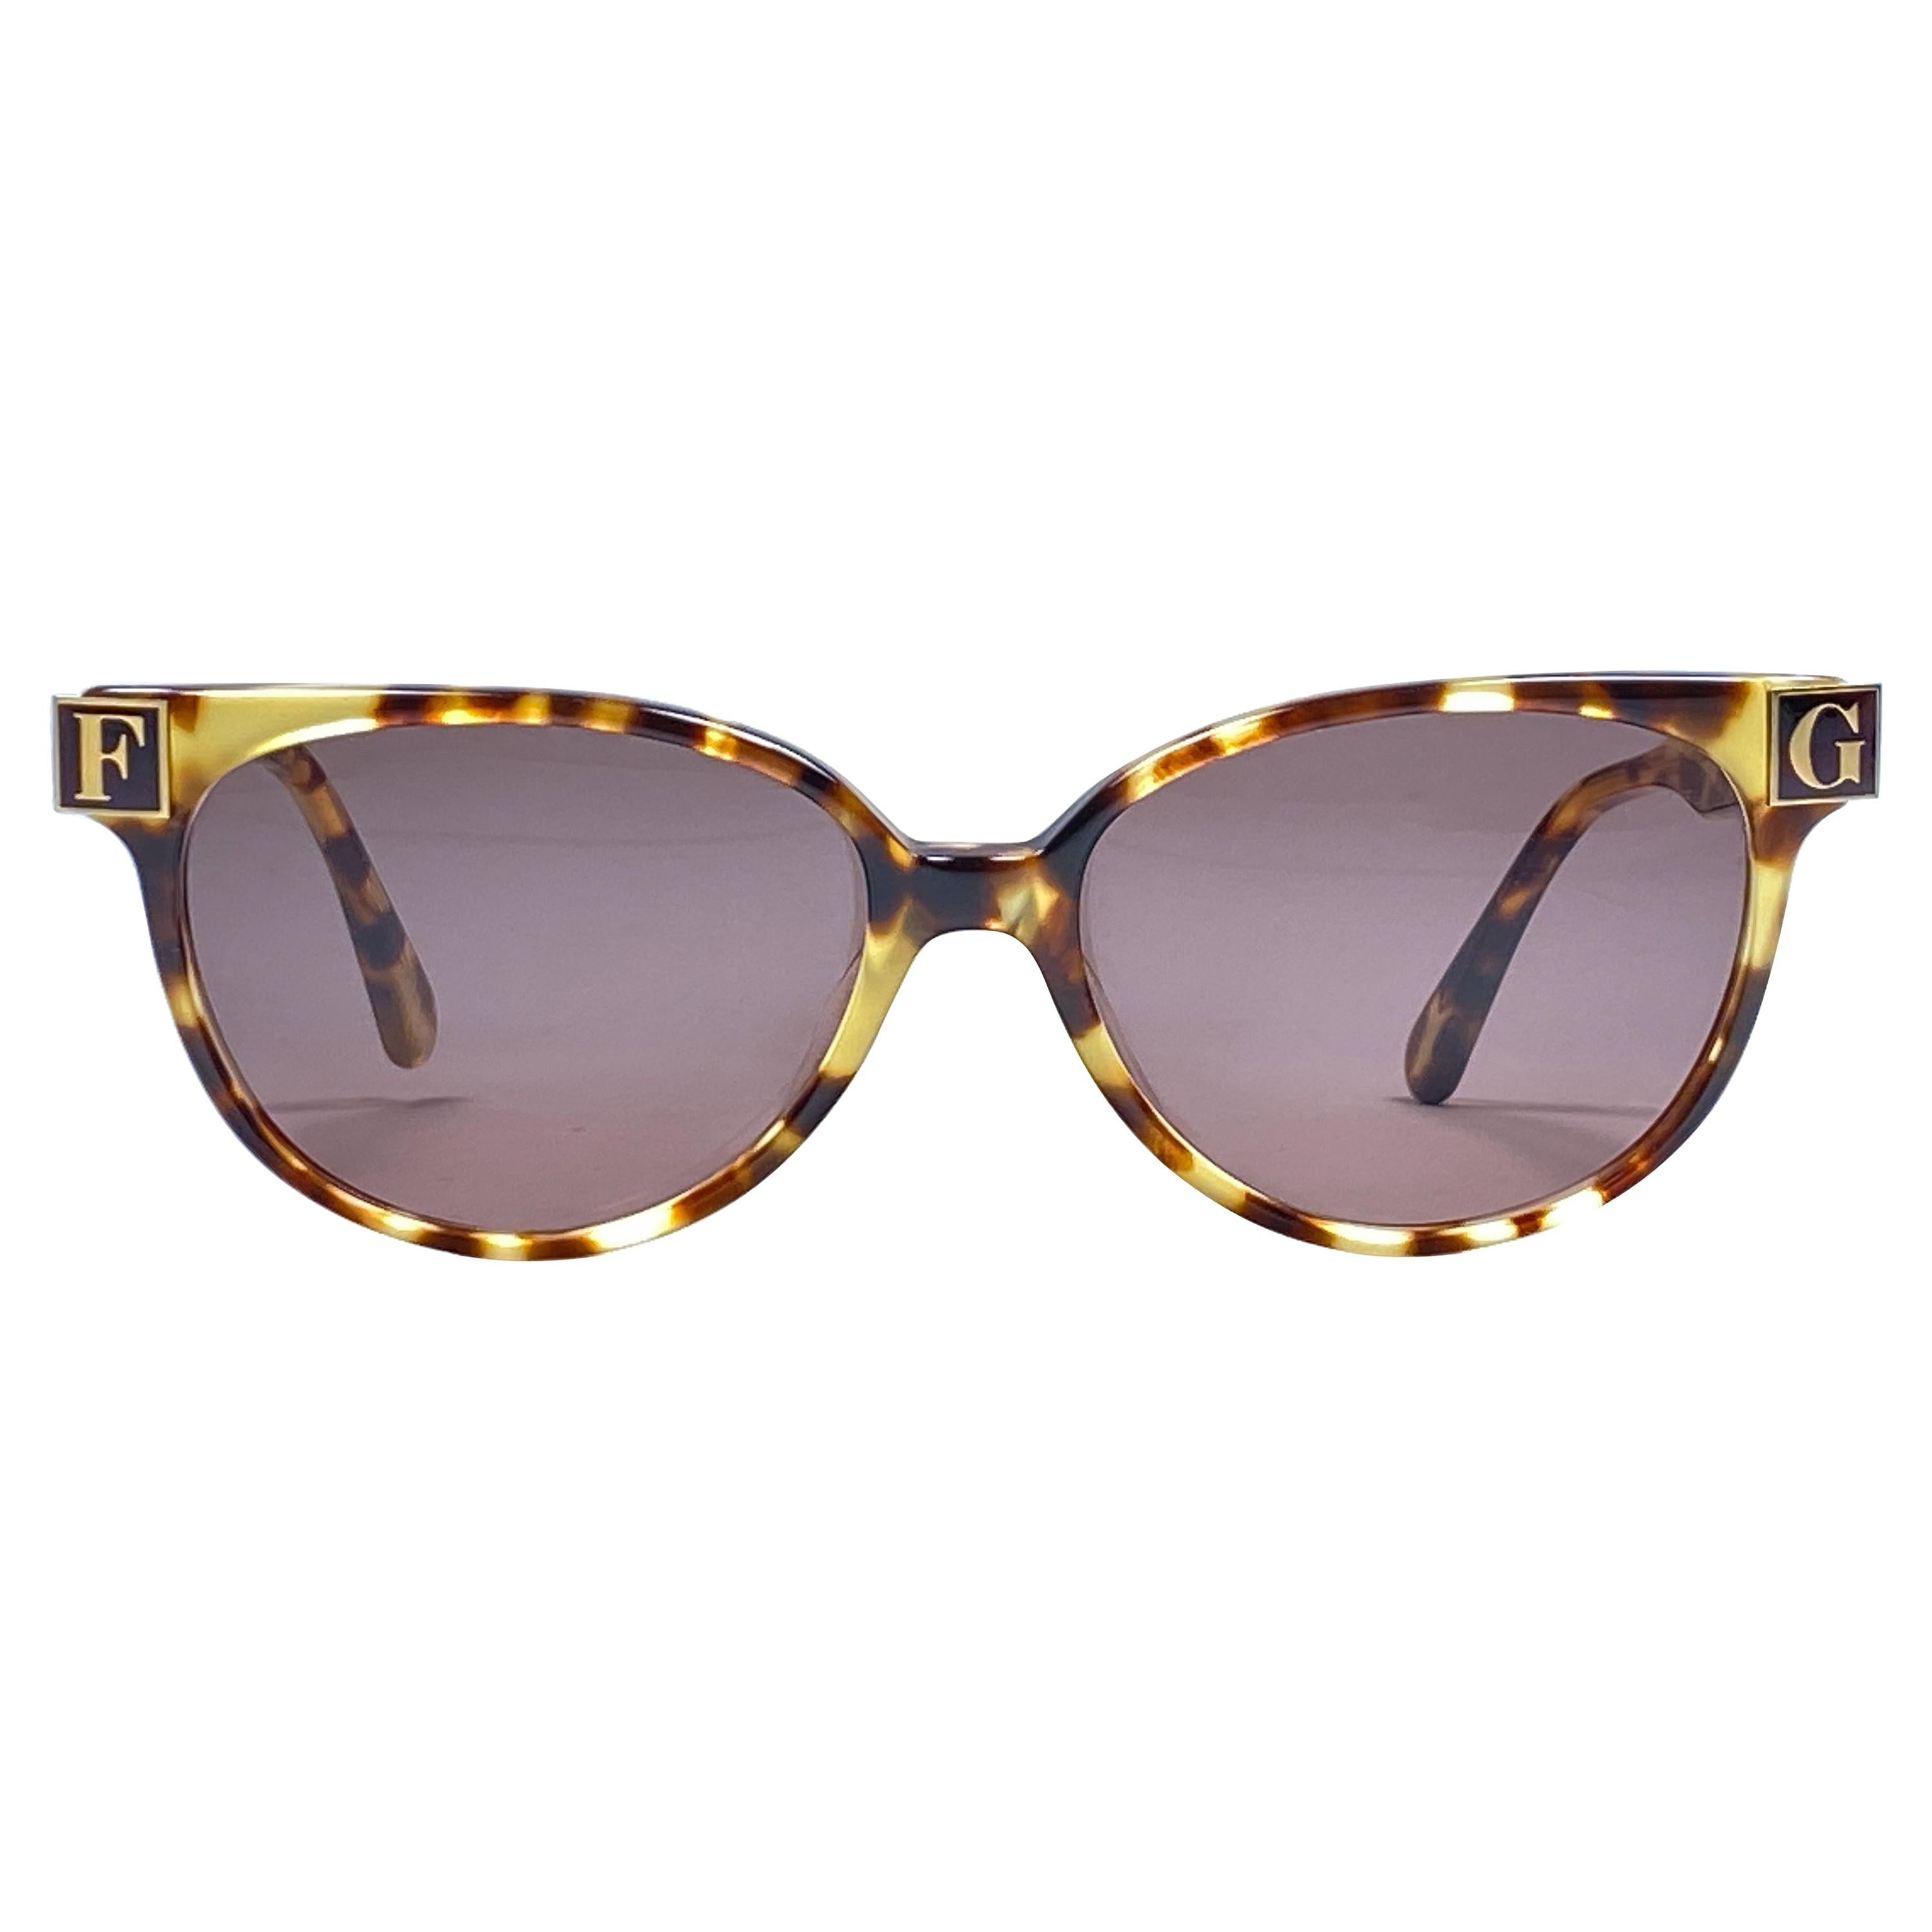 New Vintage Gianfranco Ferré GFF 105 Gold / Tortoise 1990 Italy Sunglasses For Sale